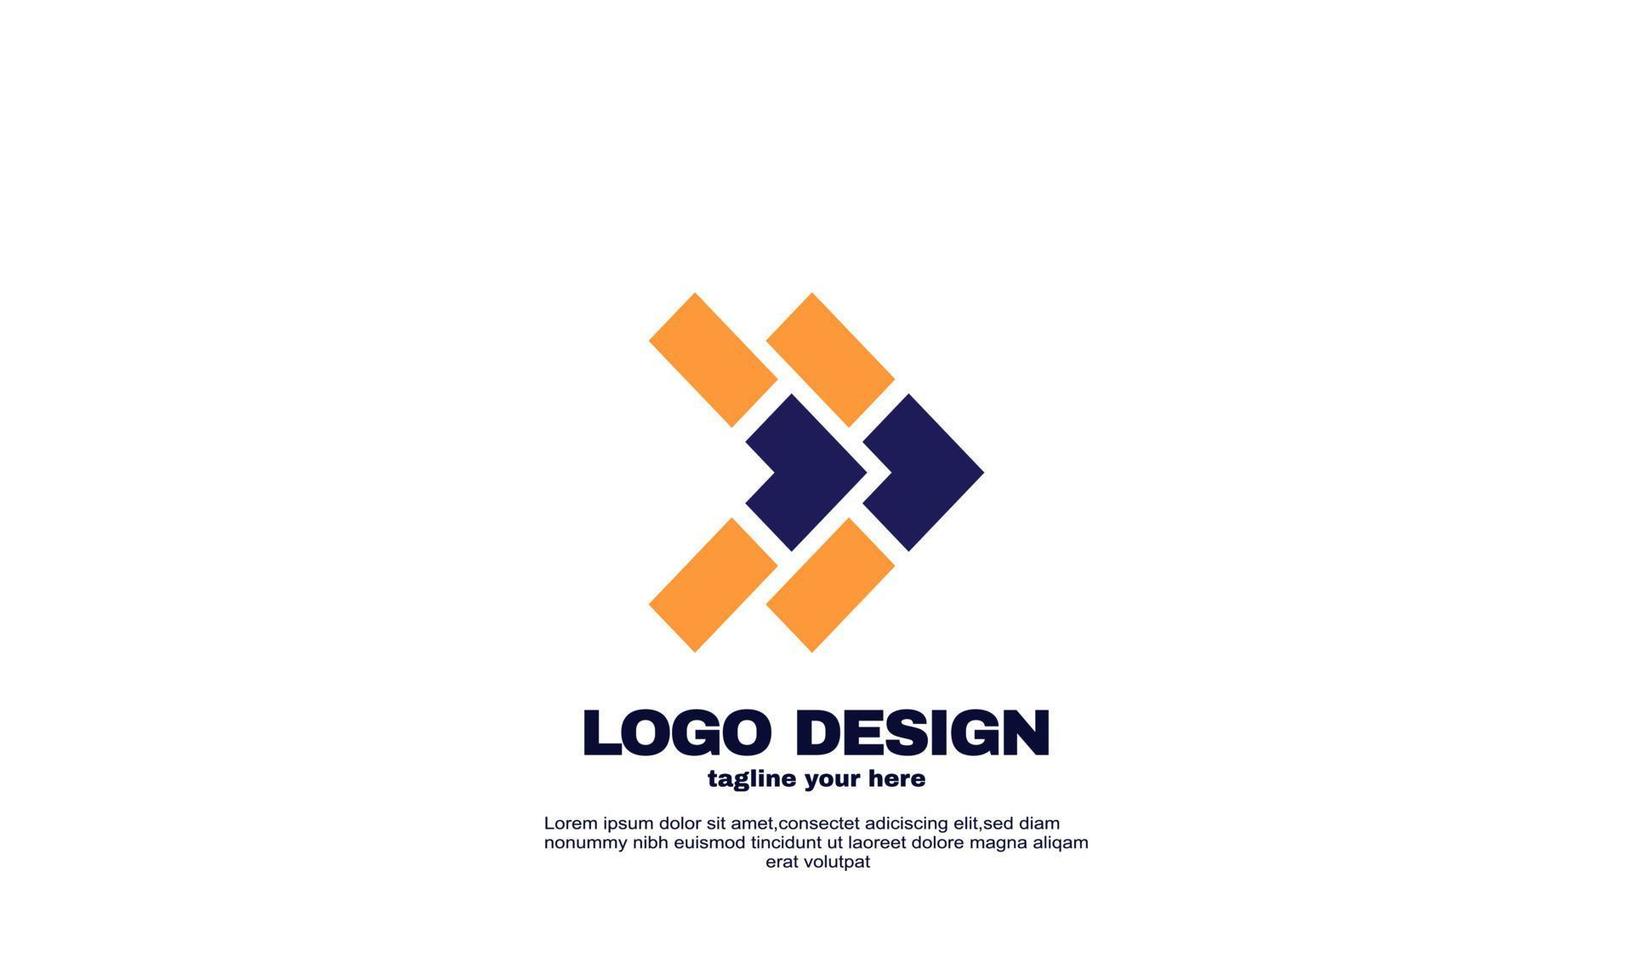 modelo de identidade de marca de logotipo de design elegante de empresa corporativa de negócios abstratos vetor